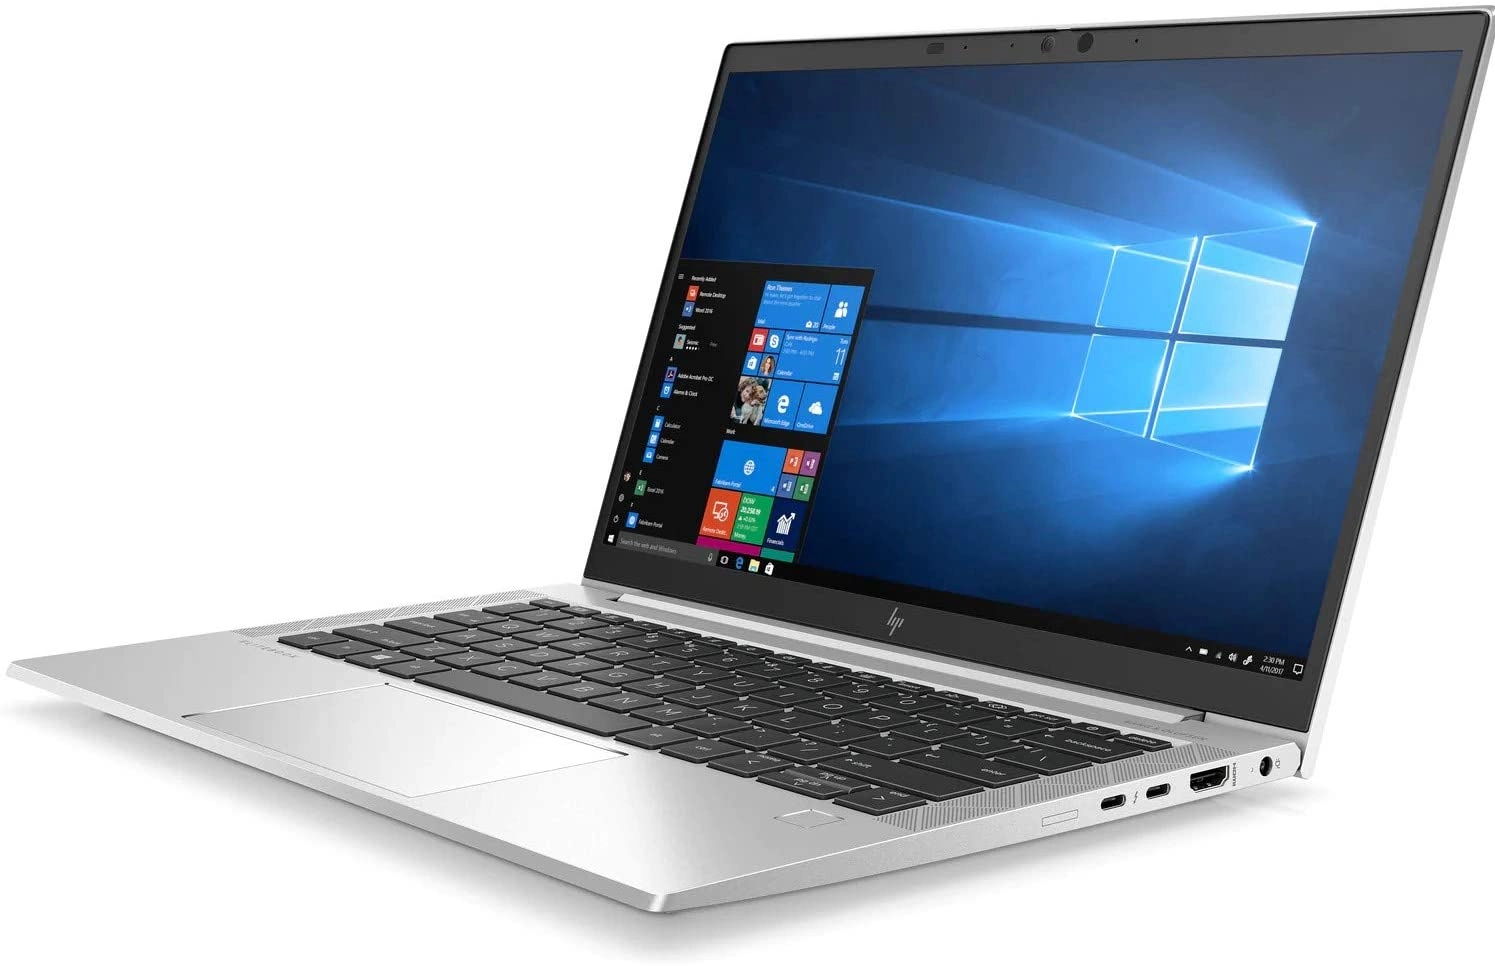 HP 176Z0EA laptop image